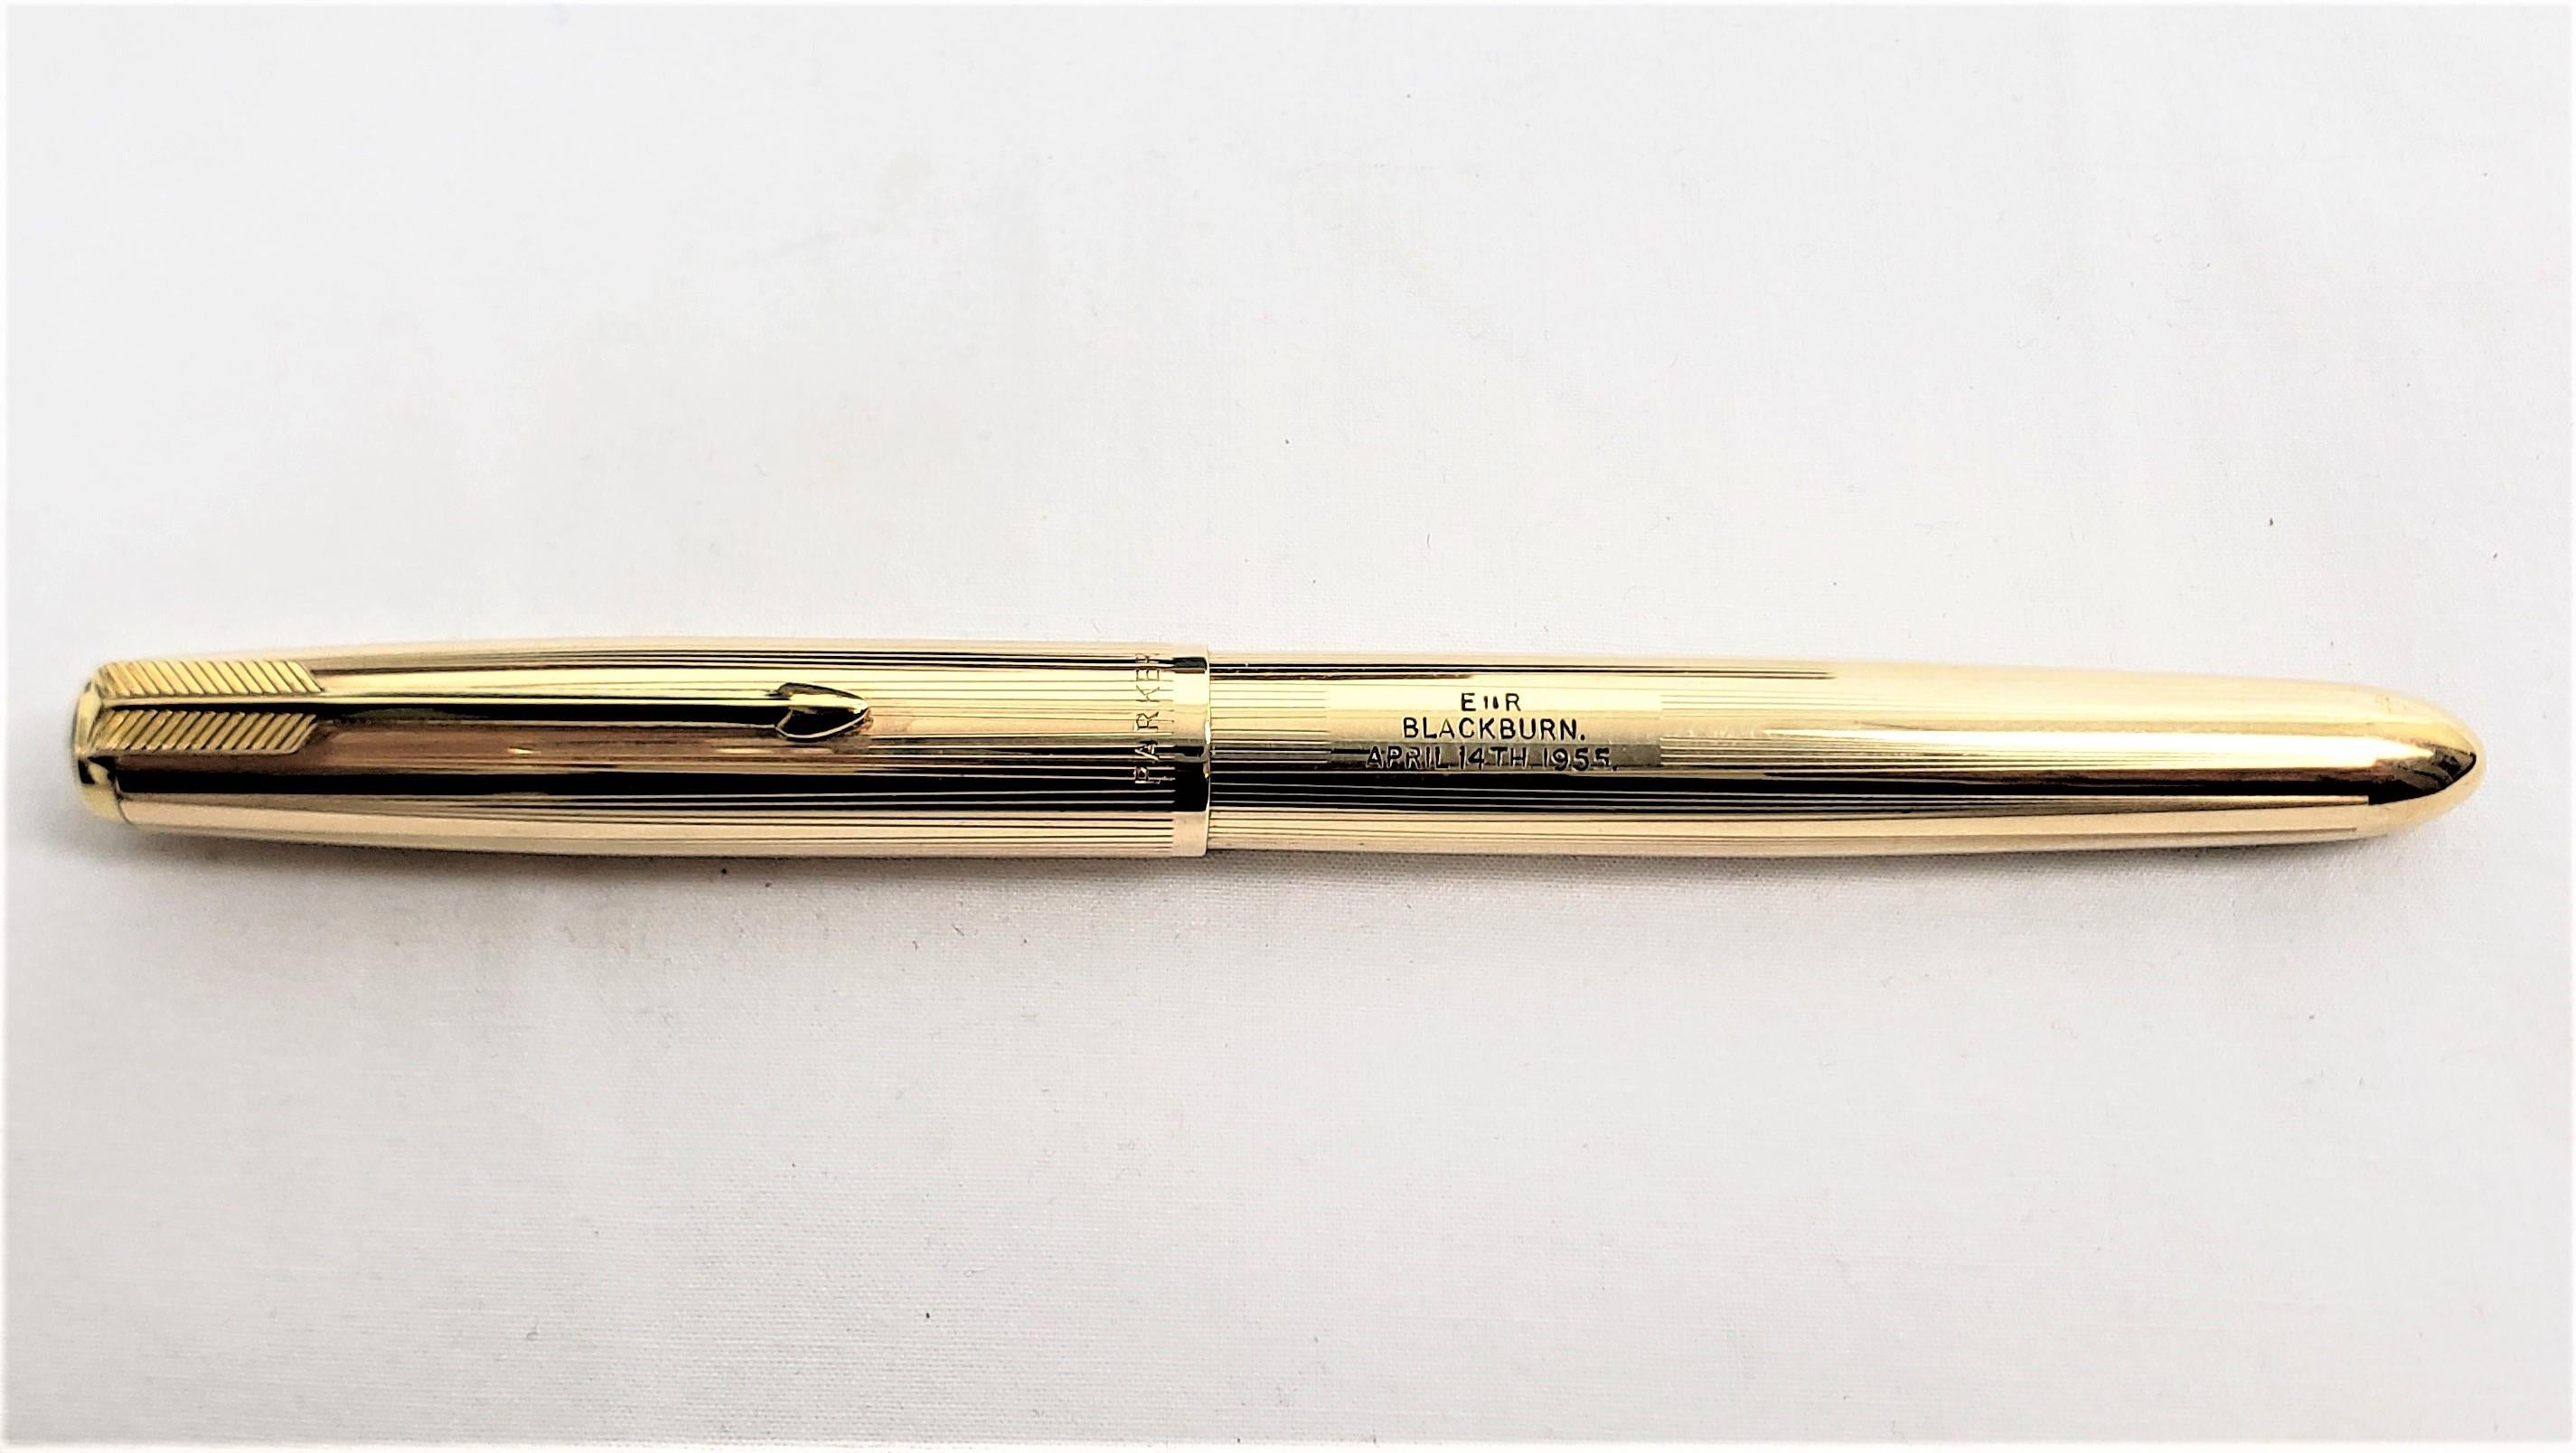 Mid-Century Modern Queen Elizabeth II Used & Presented Parker Gold Filled Pen from Blackburn Visit